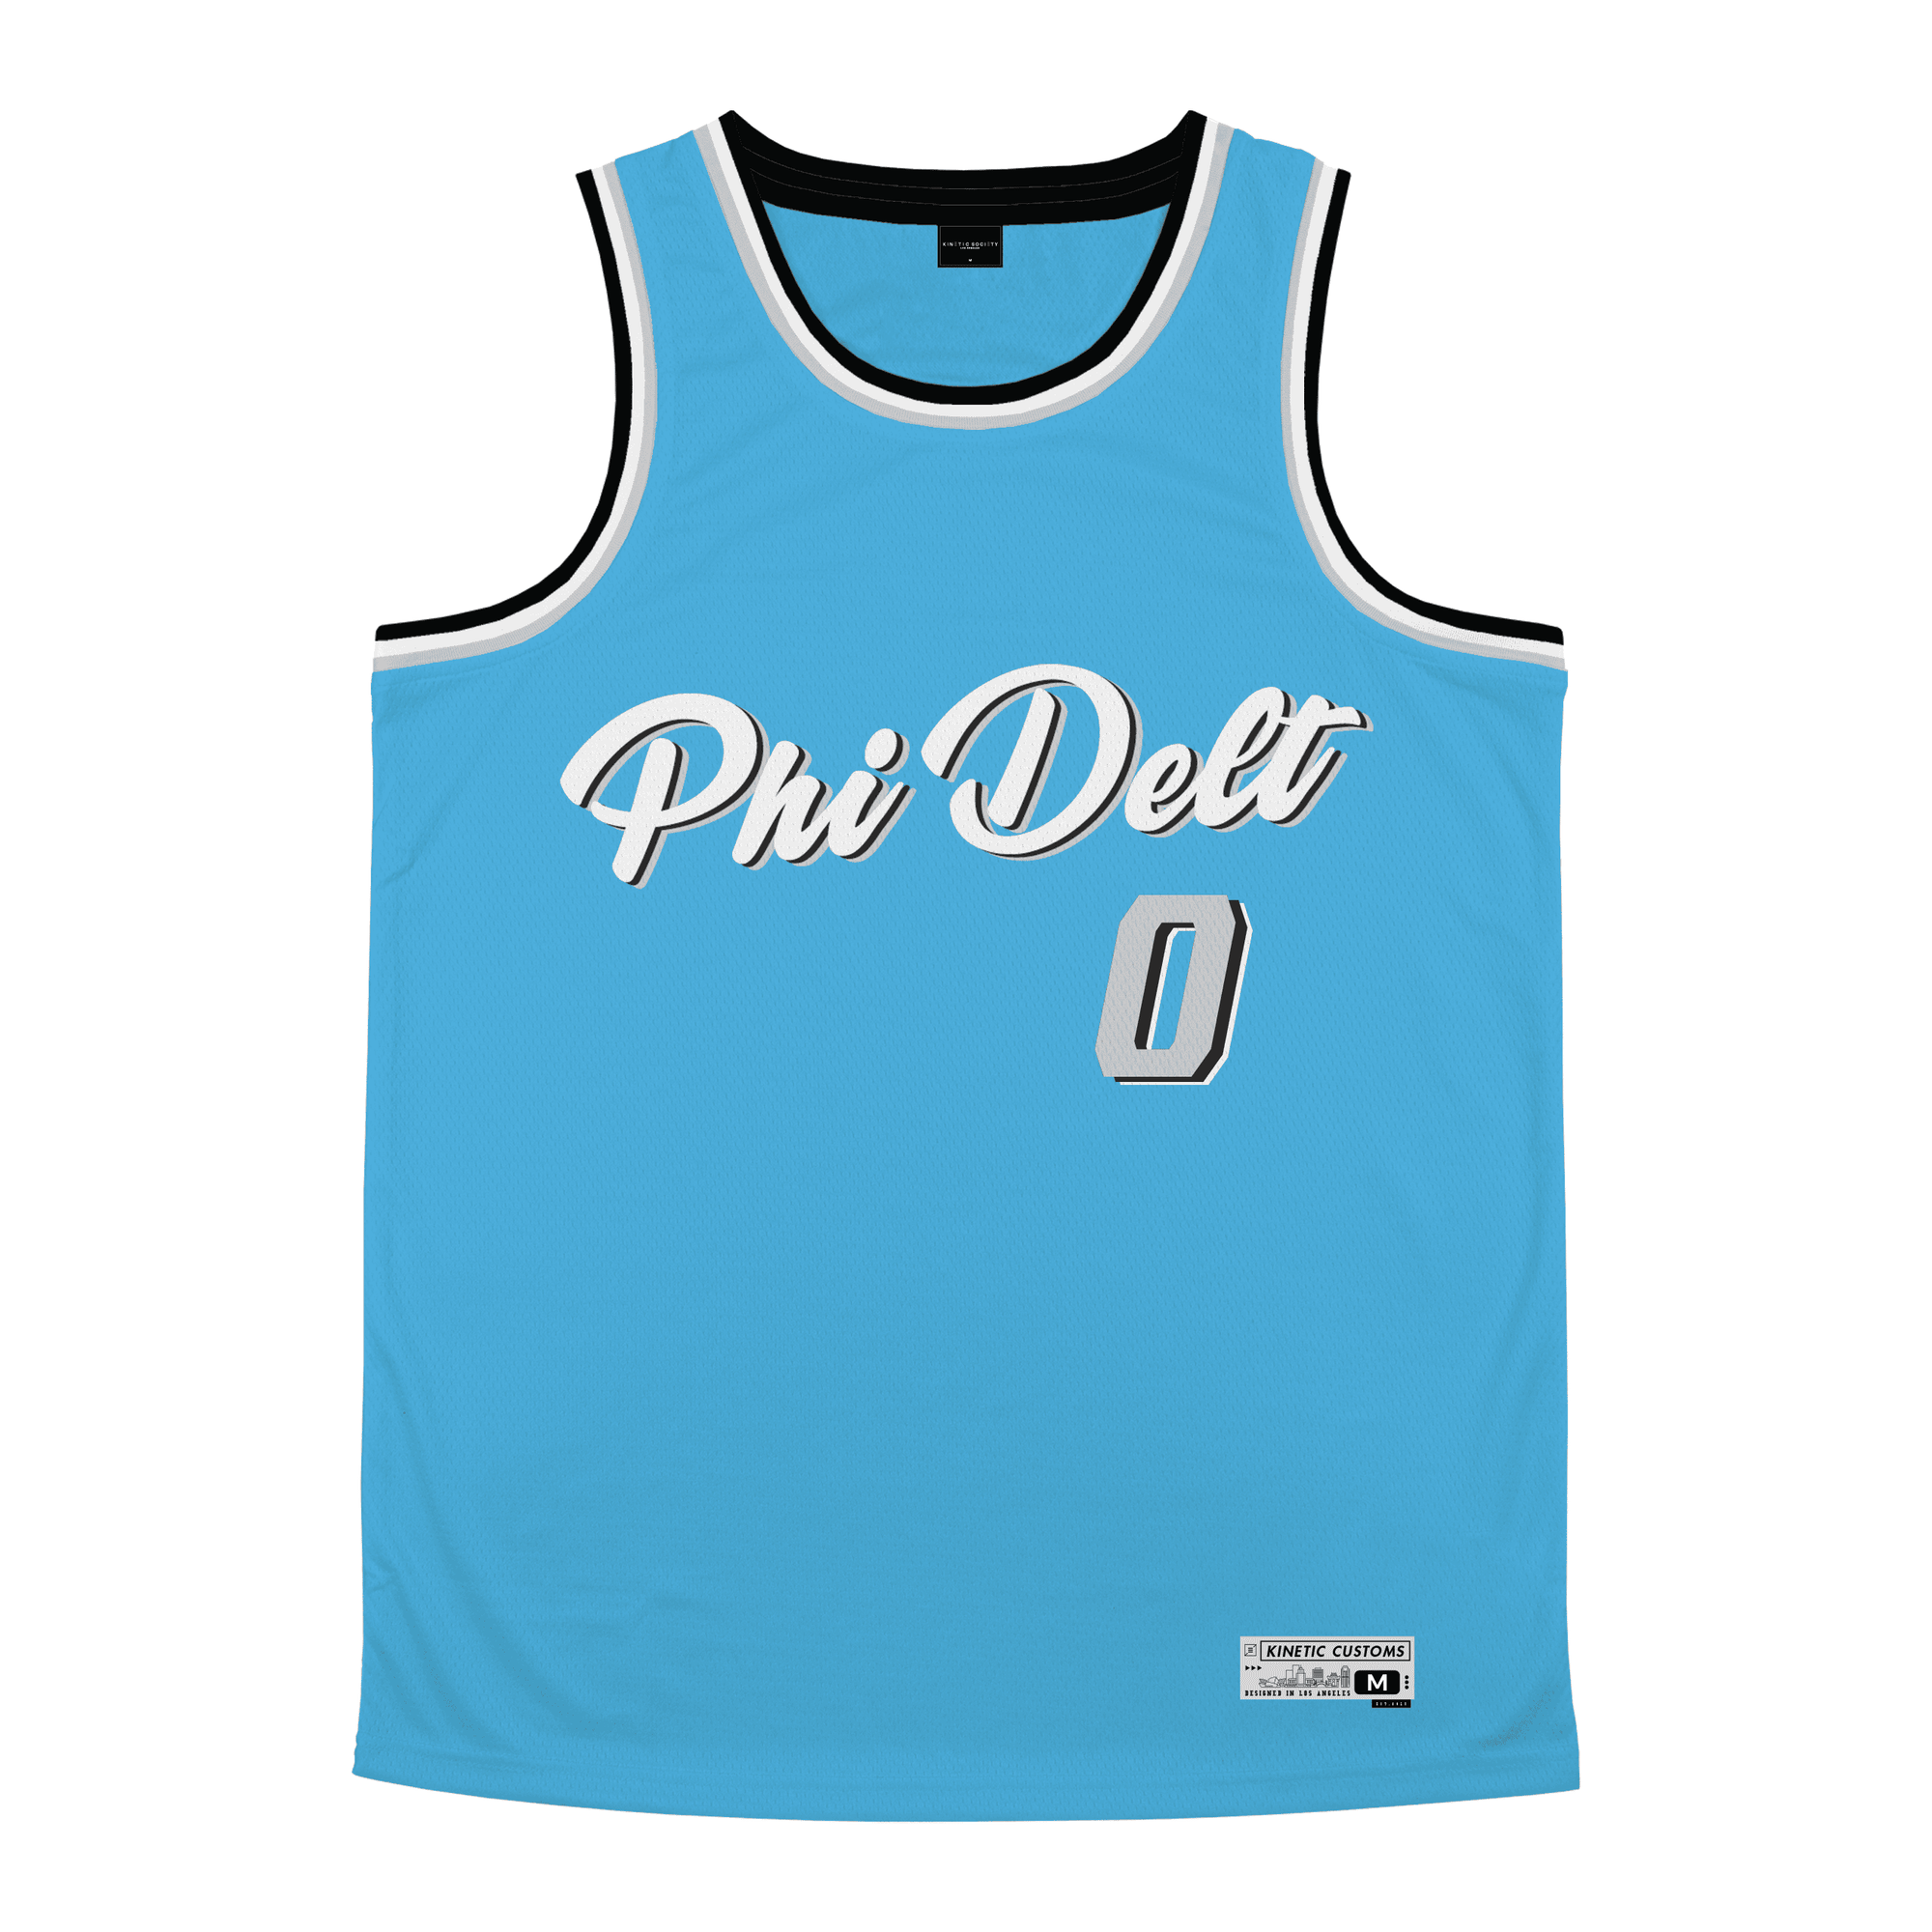 Phi Delta Theta - Pacific Mist Basketball Jersey